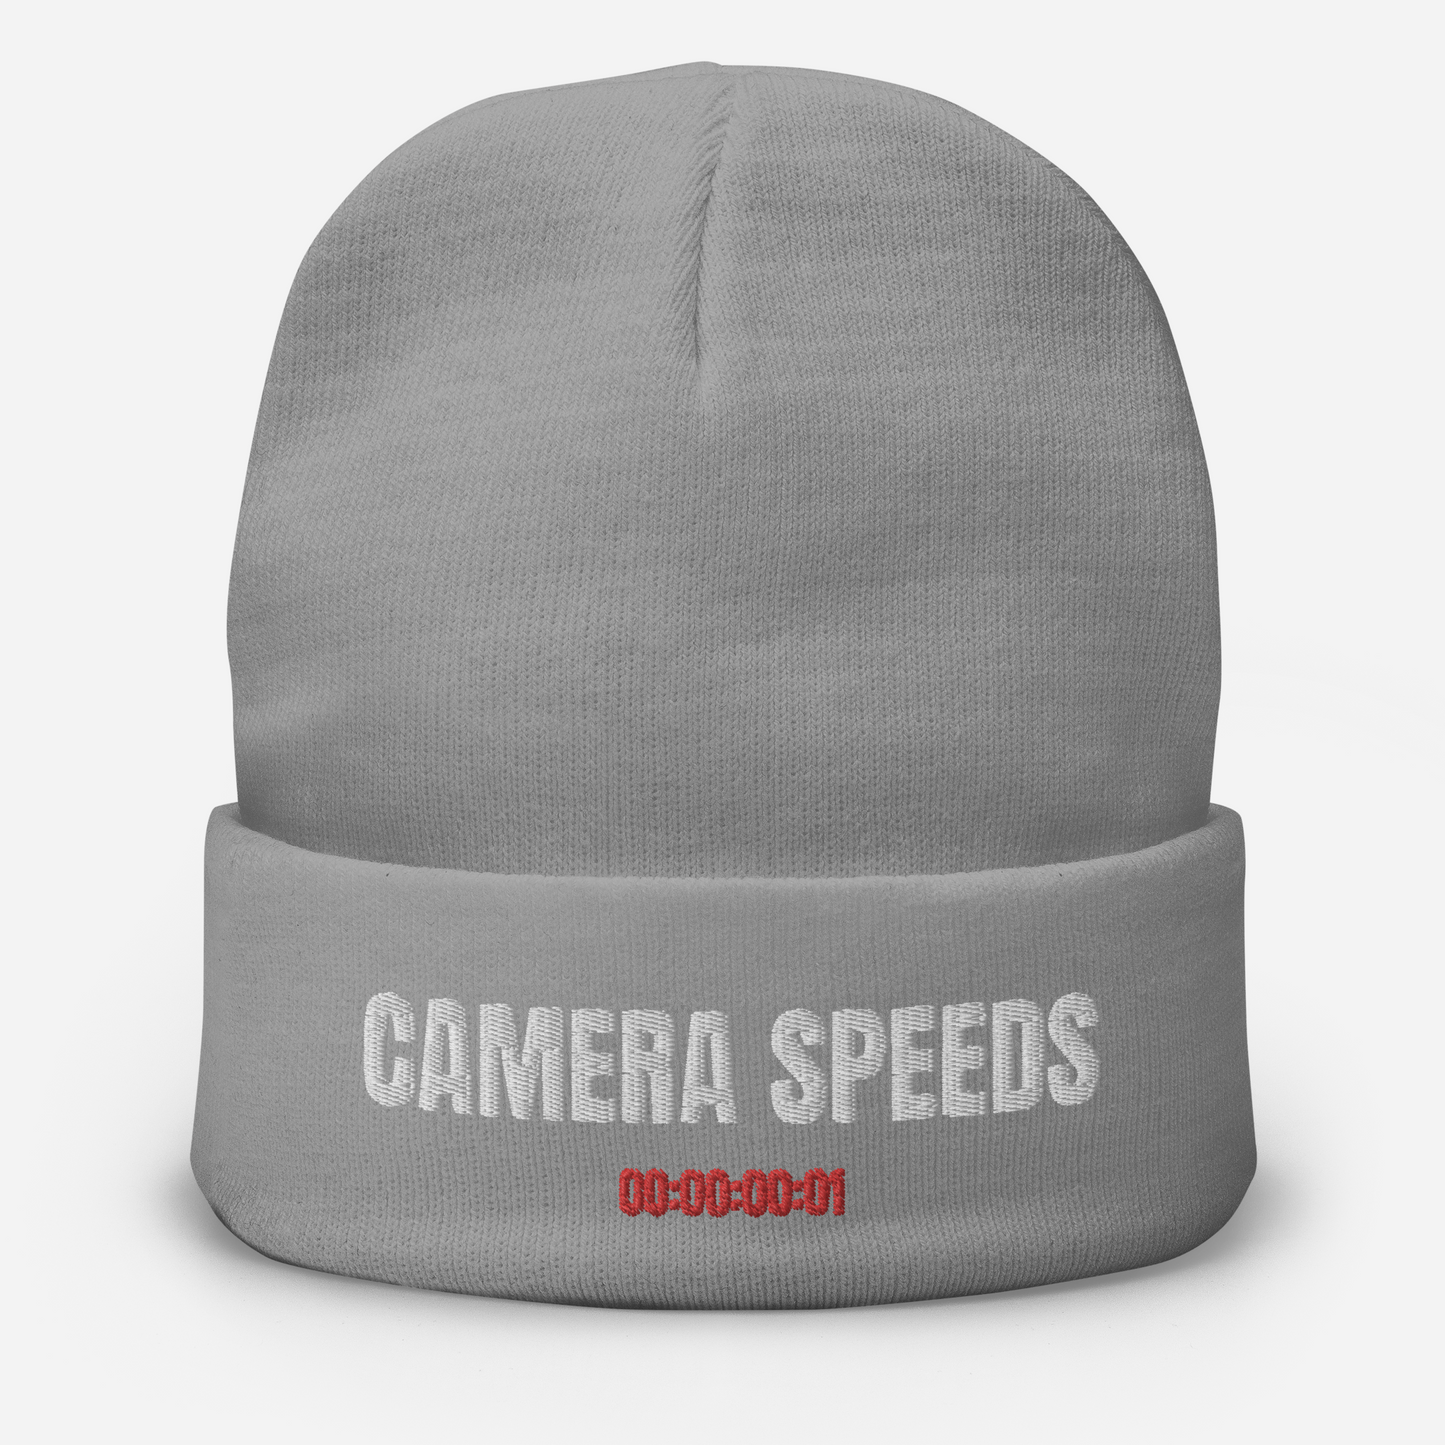 Camera Speeds Embroidered Beanie (Variant B)